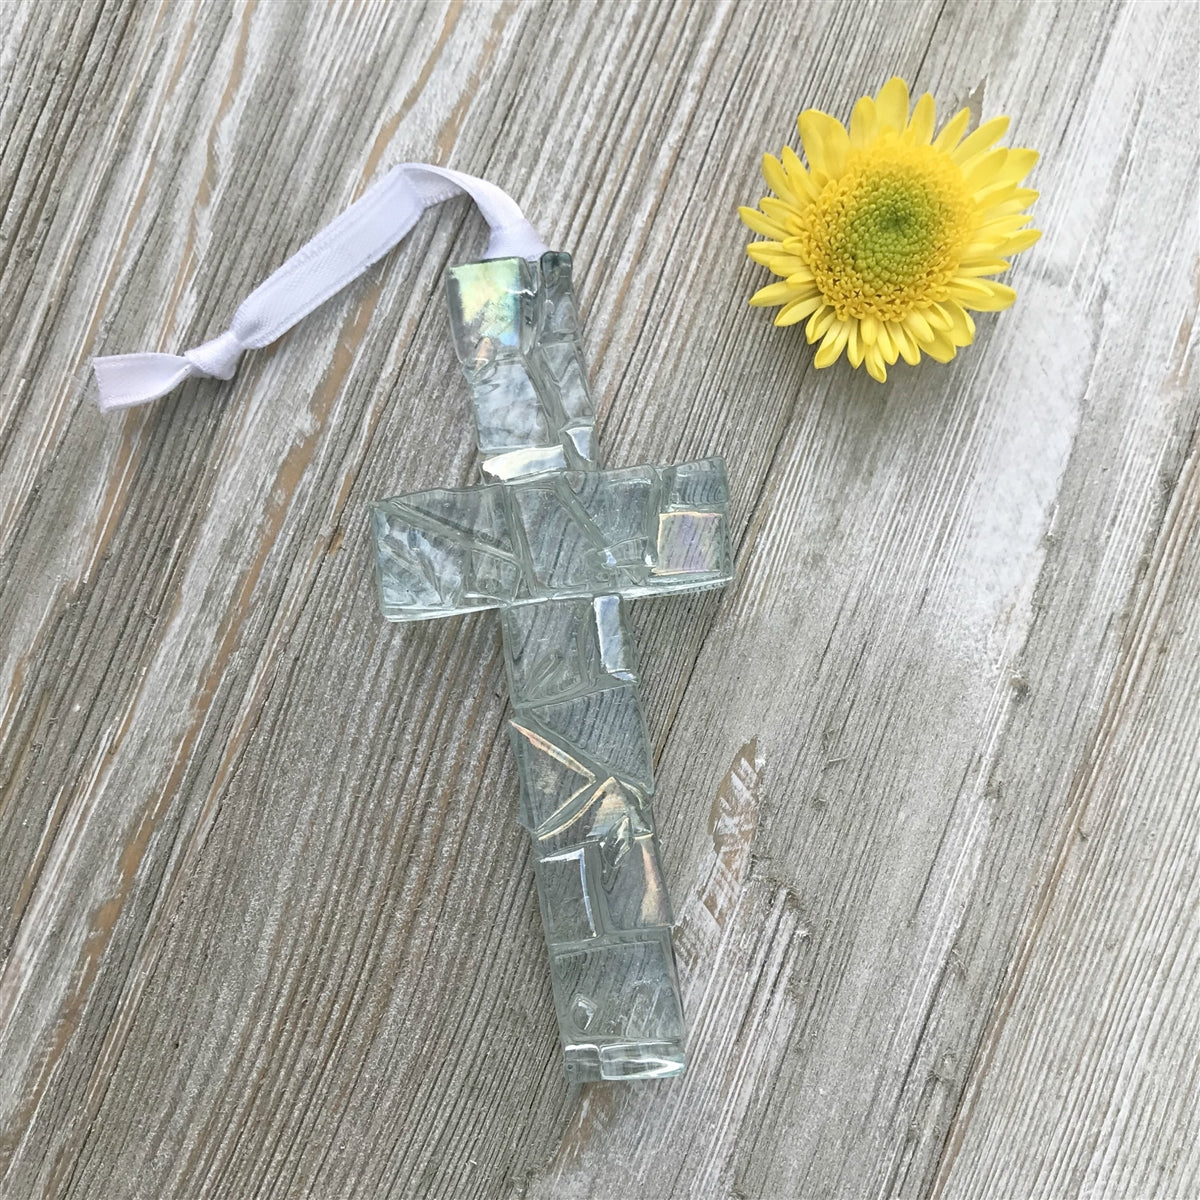 Irish Baby Gift: Blessing Clear Mosaic Cross